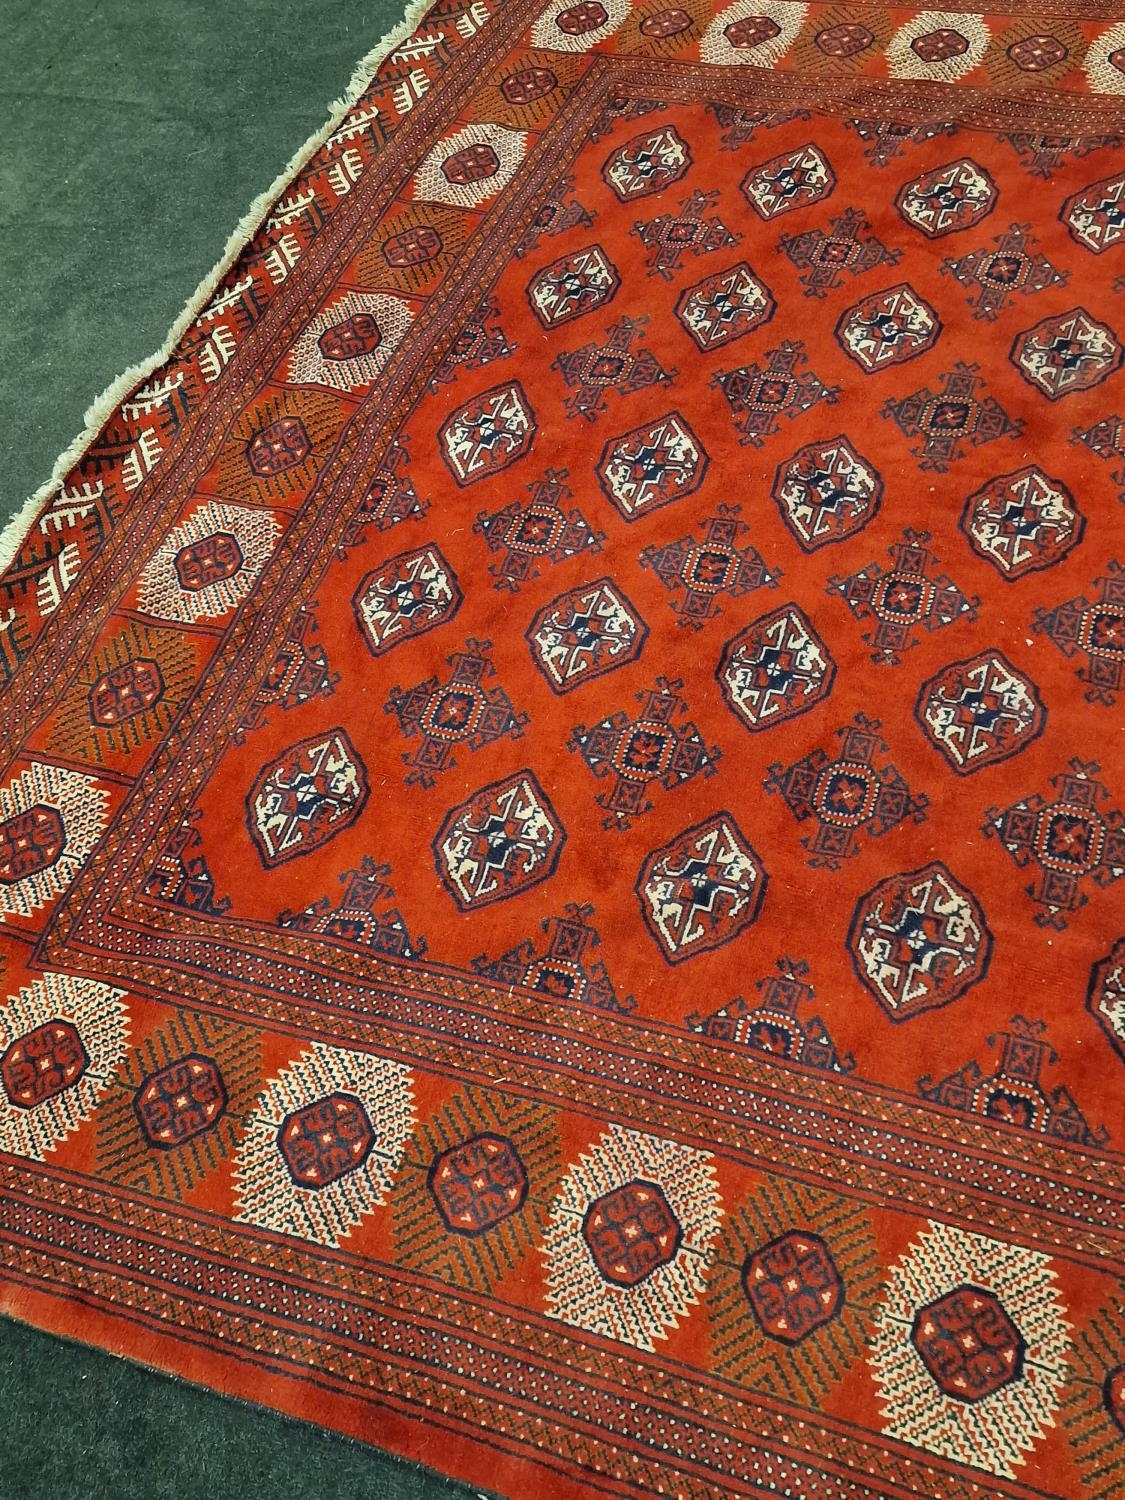 Large room size red patterned carpet 400x304cm. - Image 2 of 4